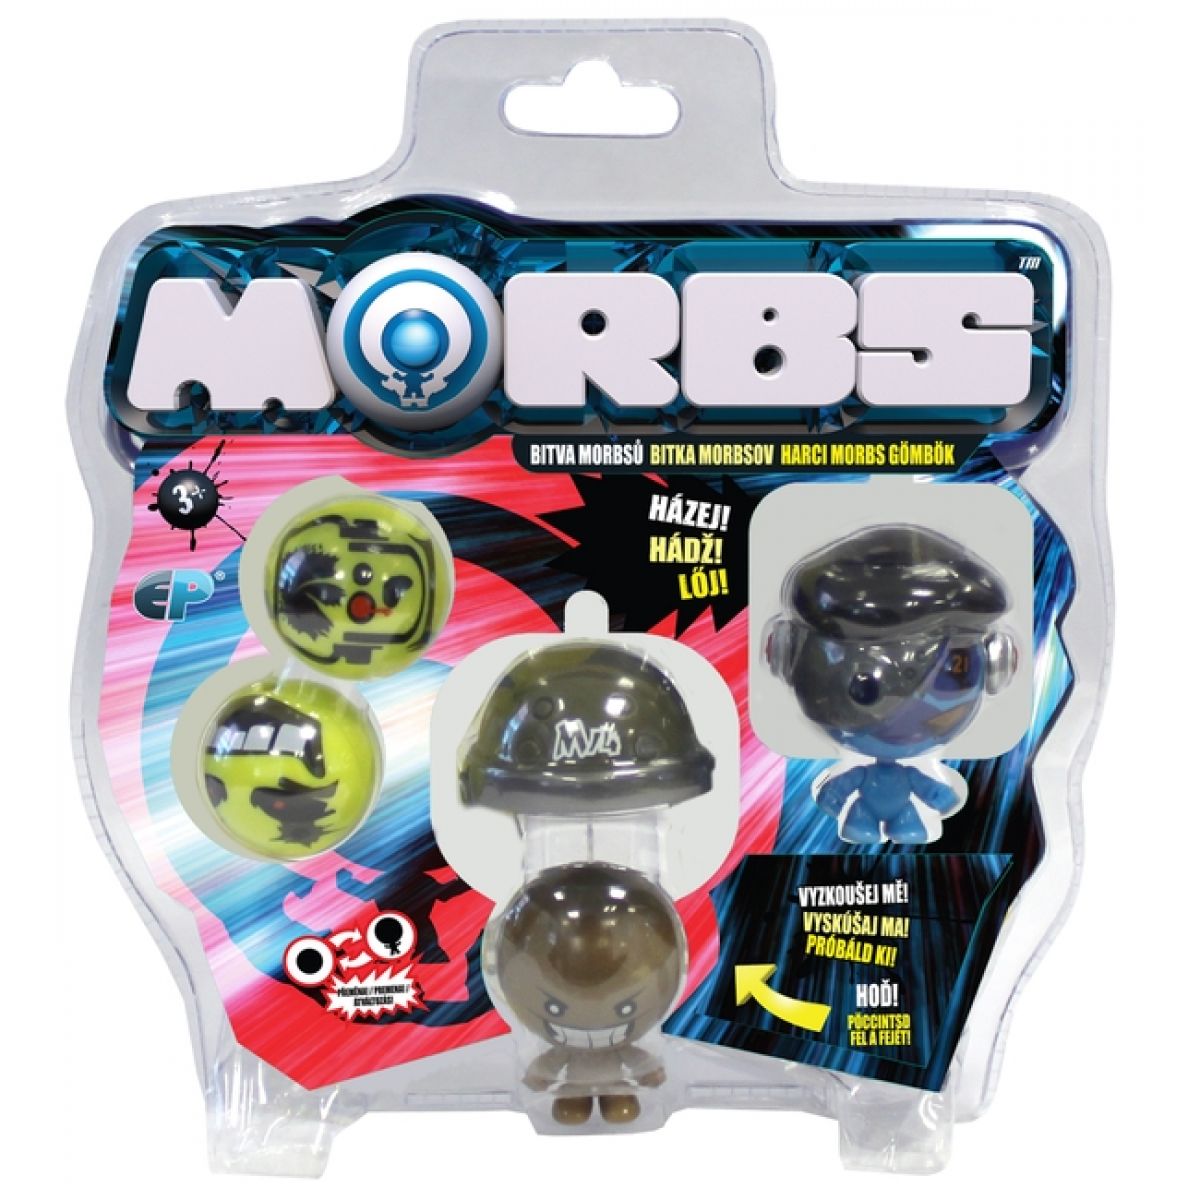 EP Line Morbs figurka 4 pack